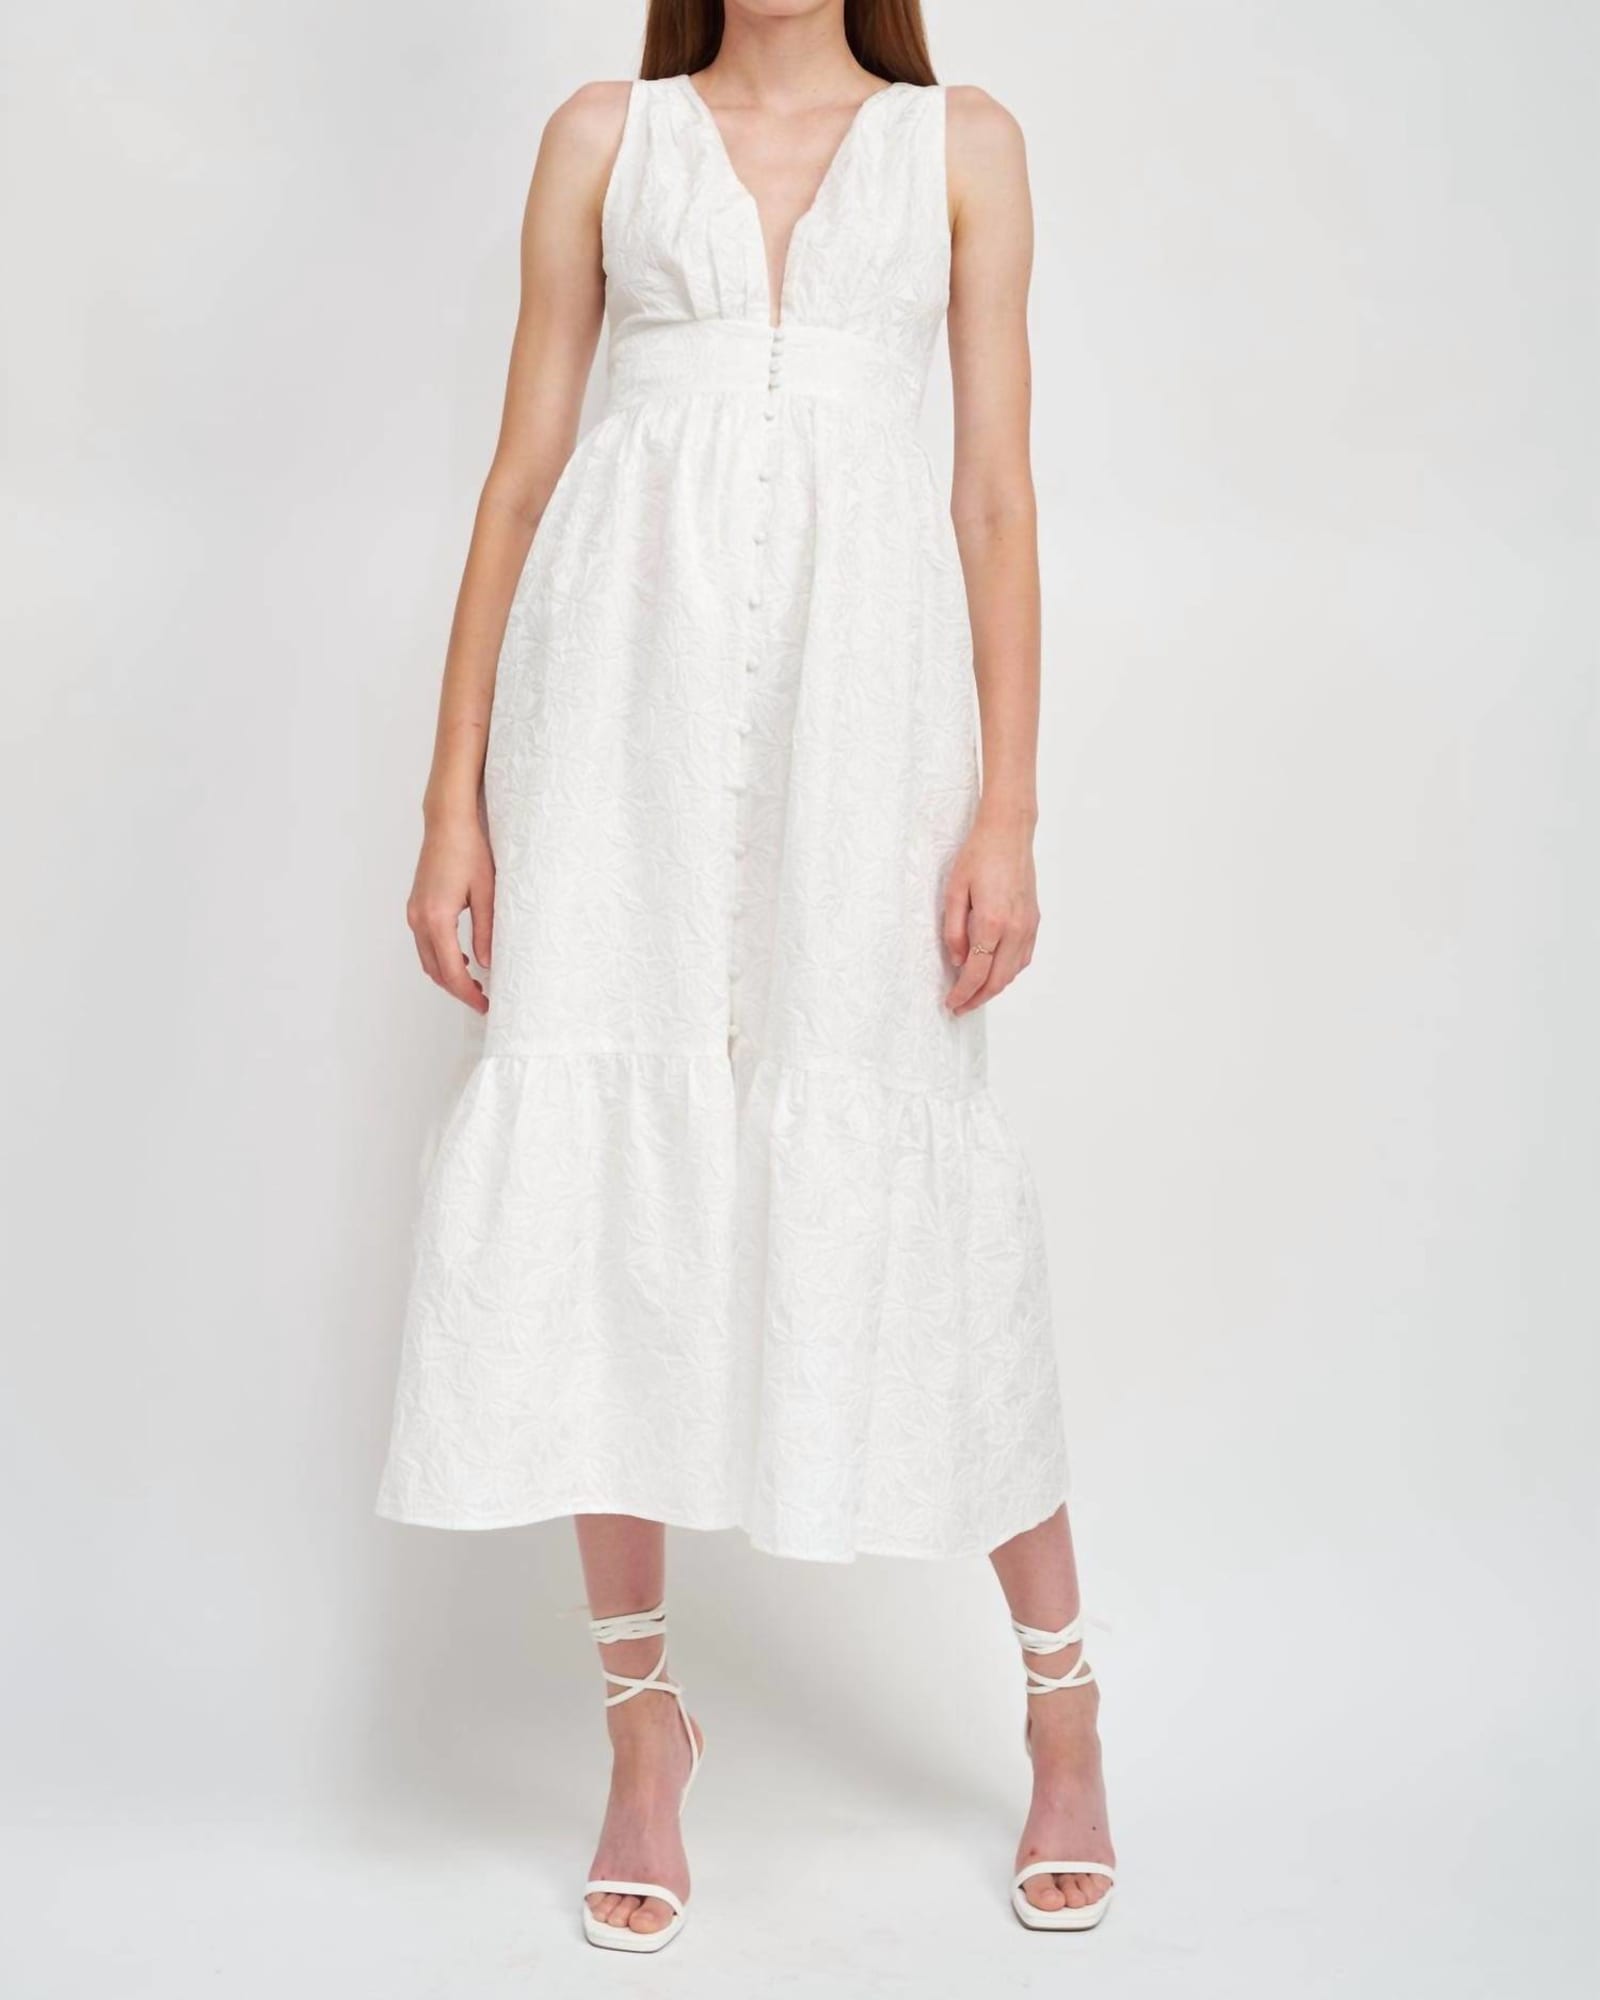 Daisy Dress in White | White